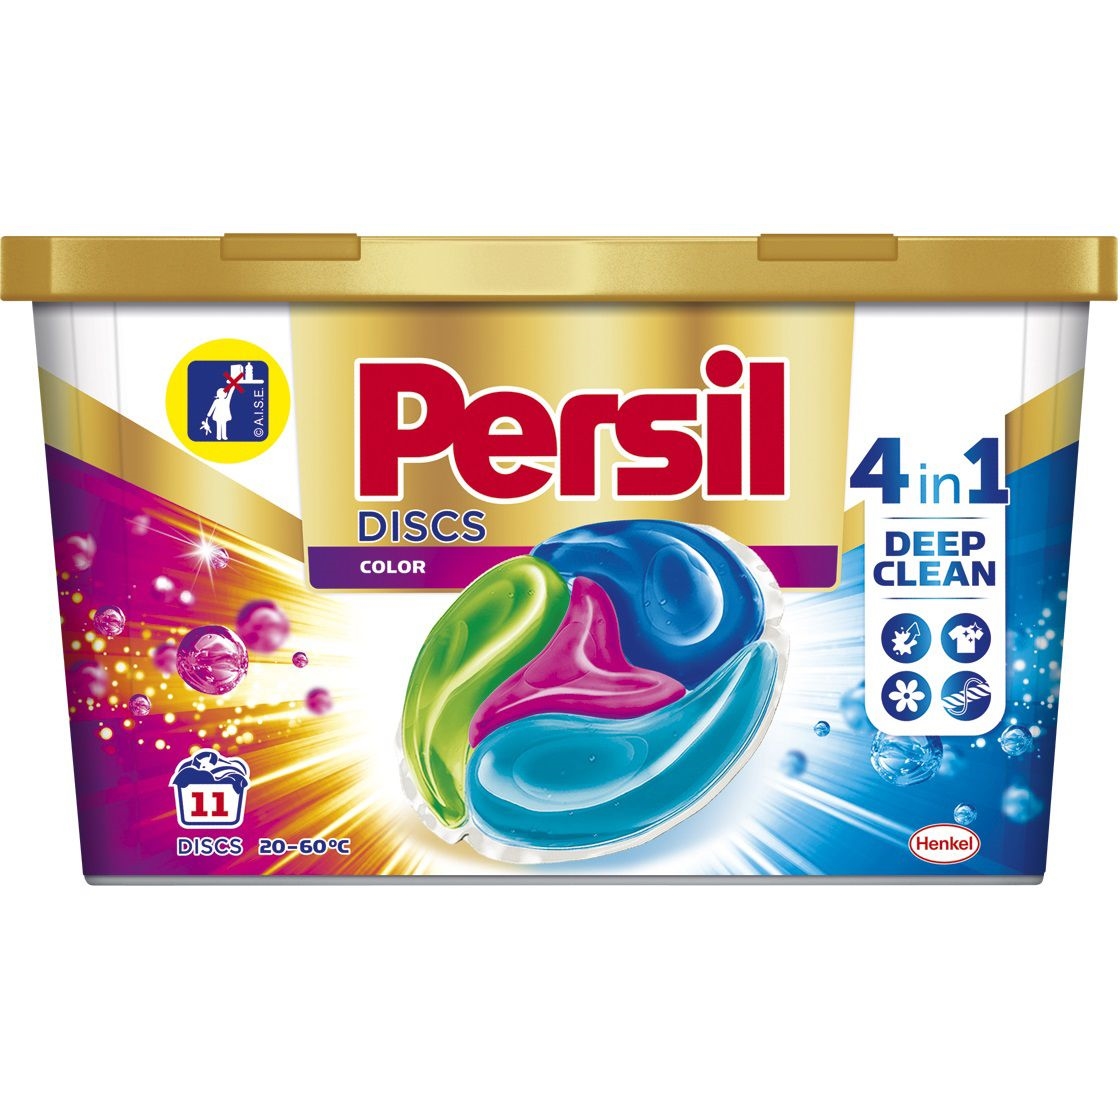 Persil Discs Color 4v1 kapsle na praní barevného prádla box 11 dávek 275g